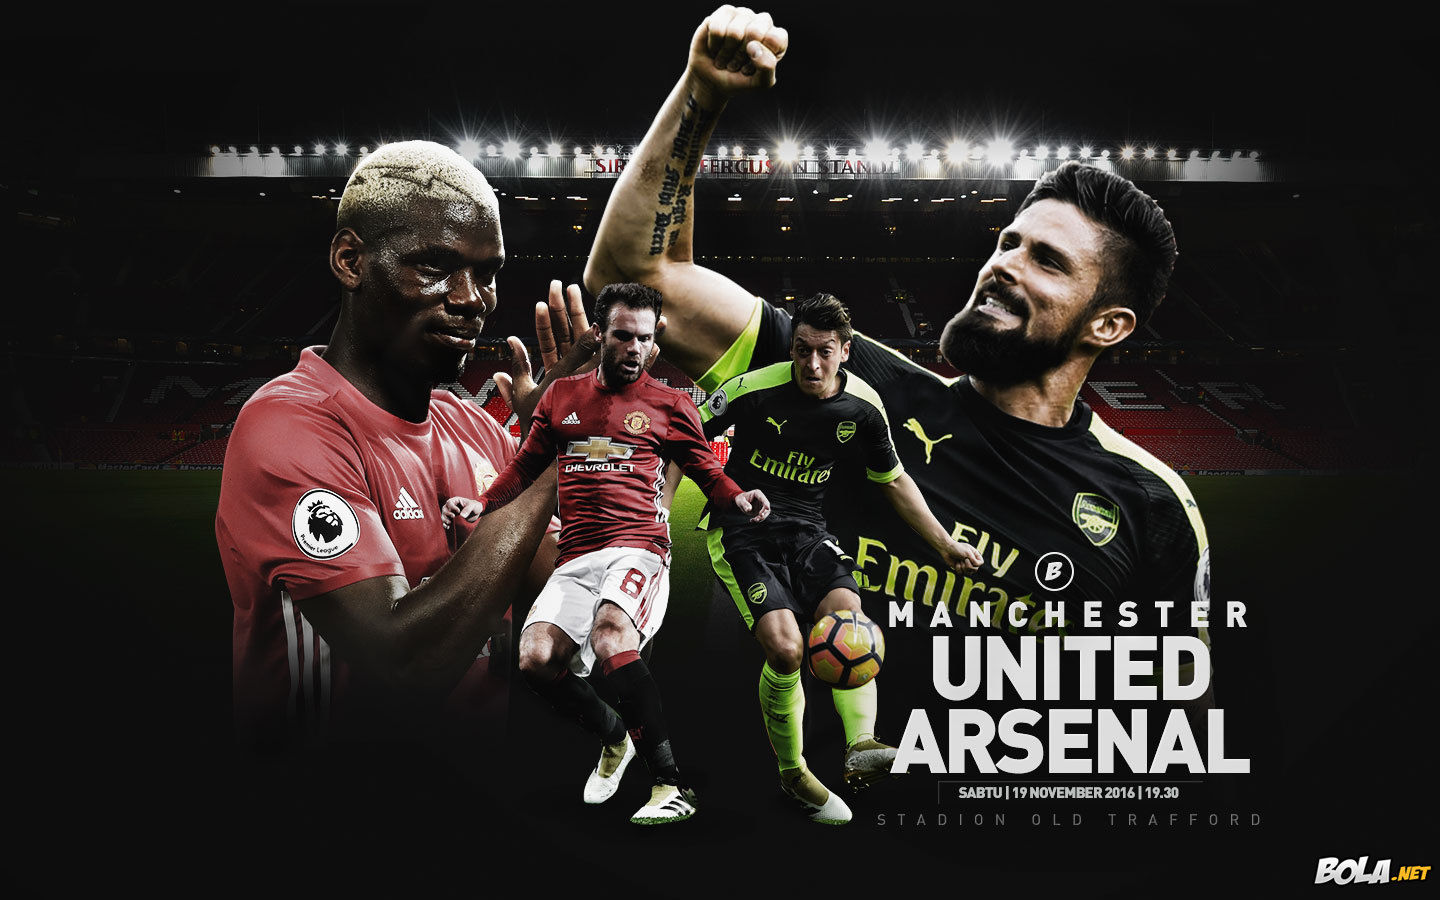 Deskripsi : Wallpaper Manchester United Vs Arsenal, size: 1440x900